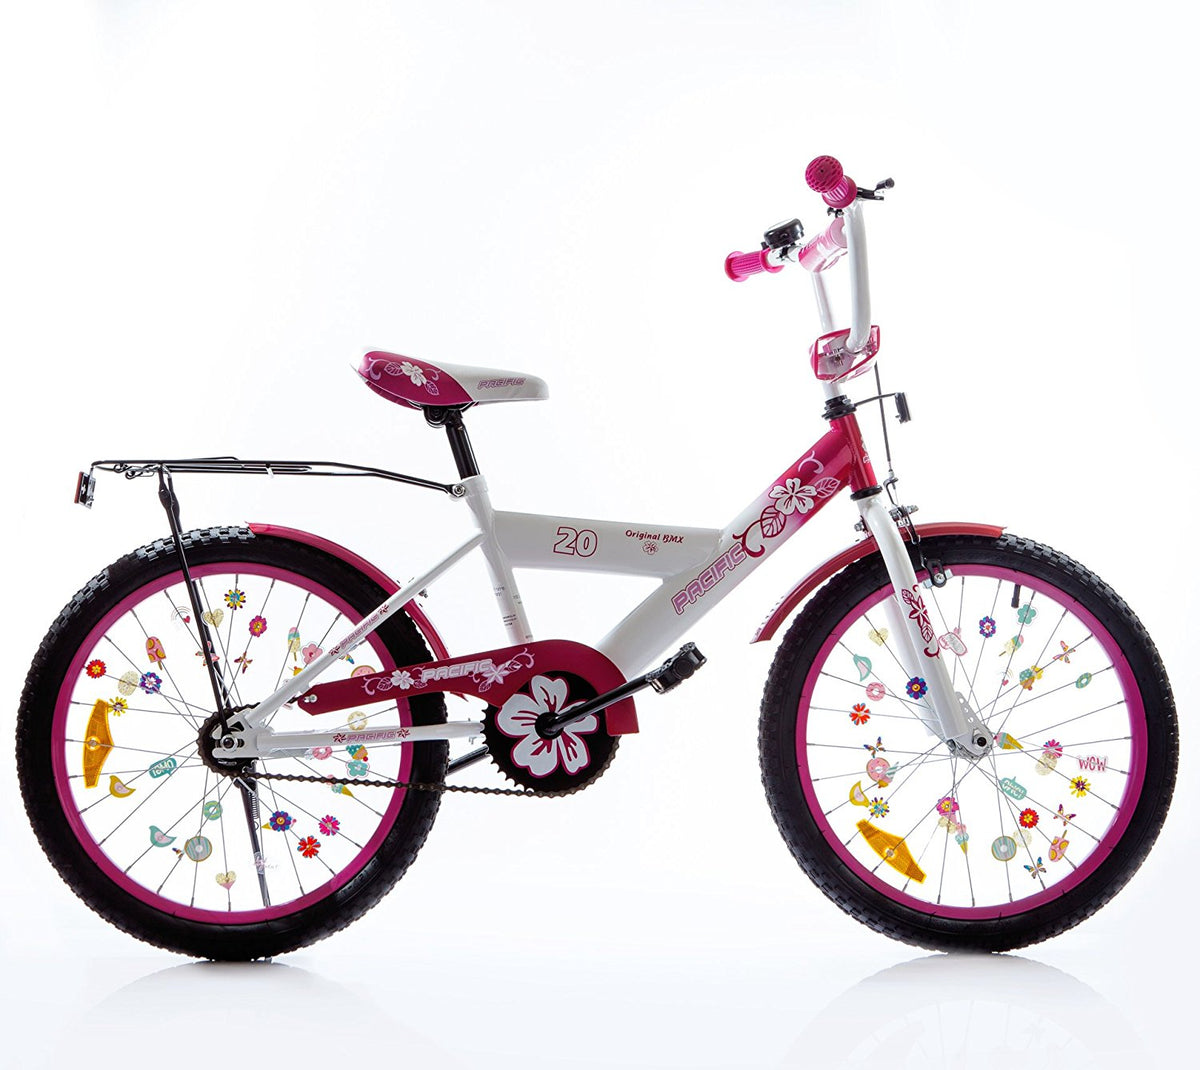 Bike Wheel Spokes Kit - 36 Different Designs - Funky Toys